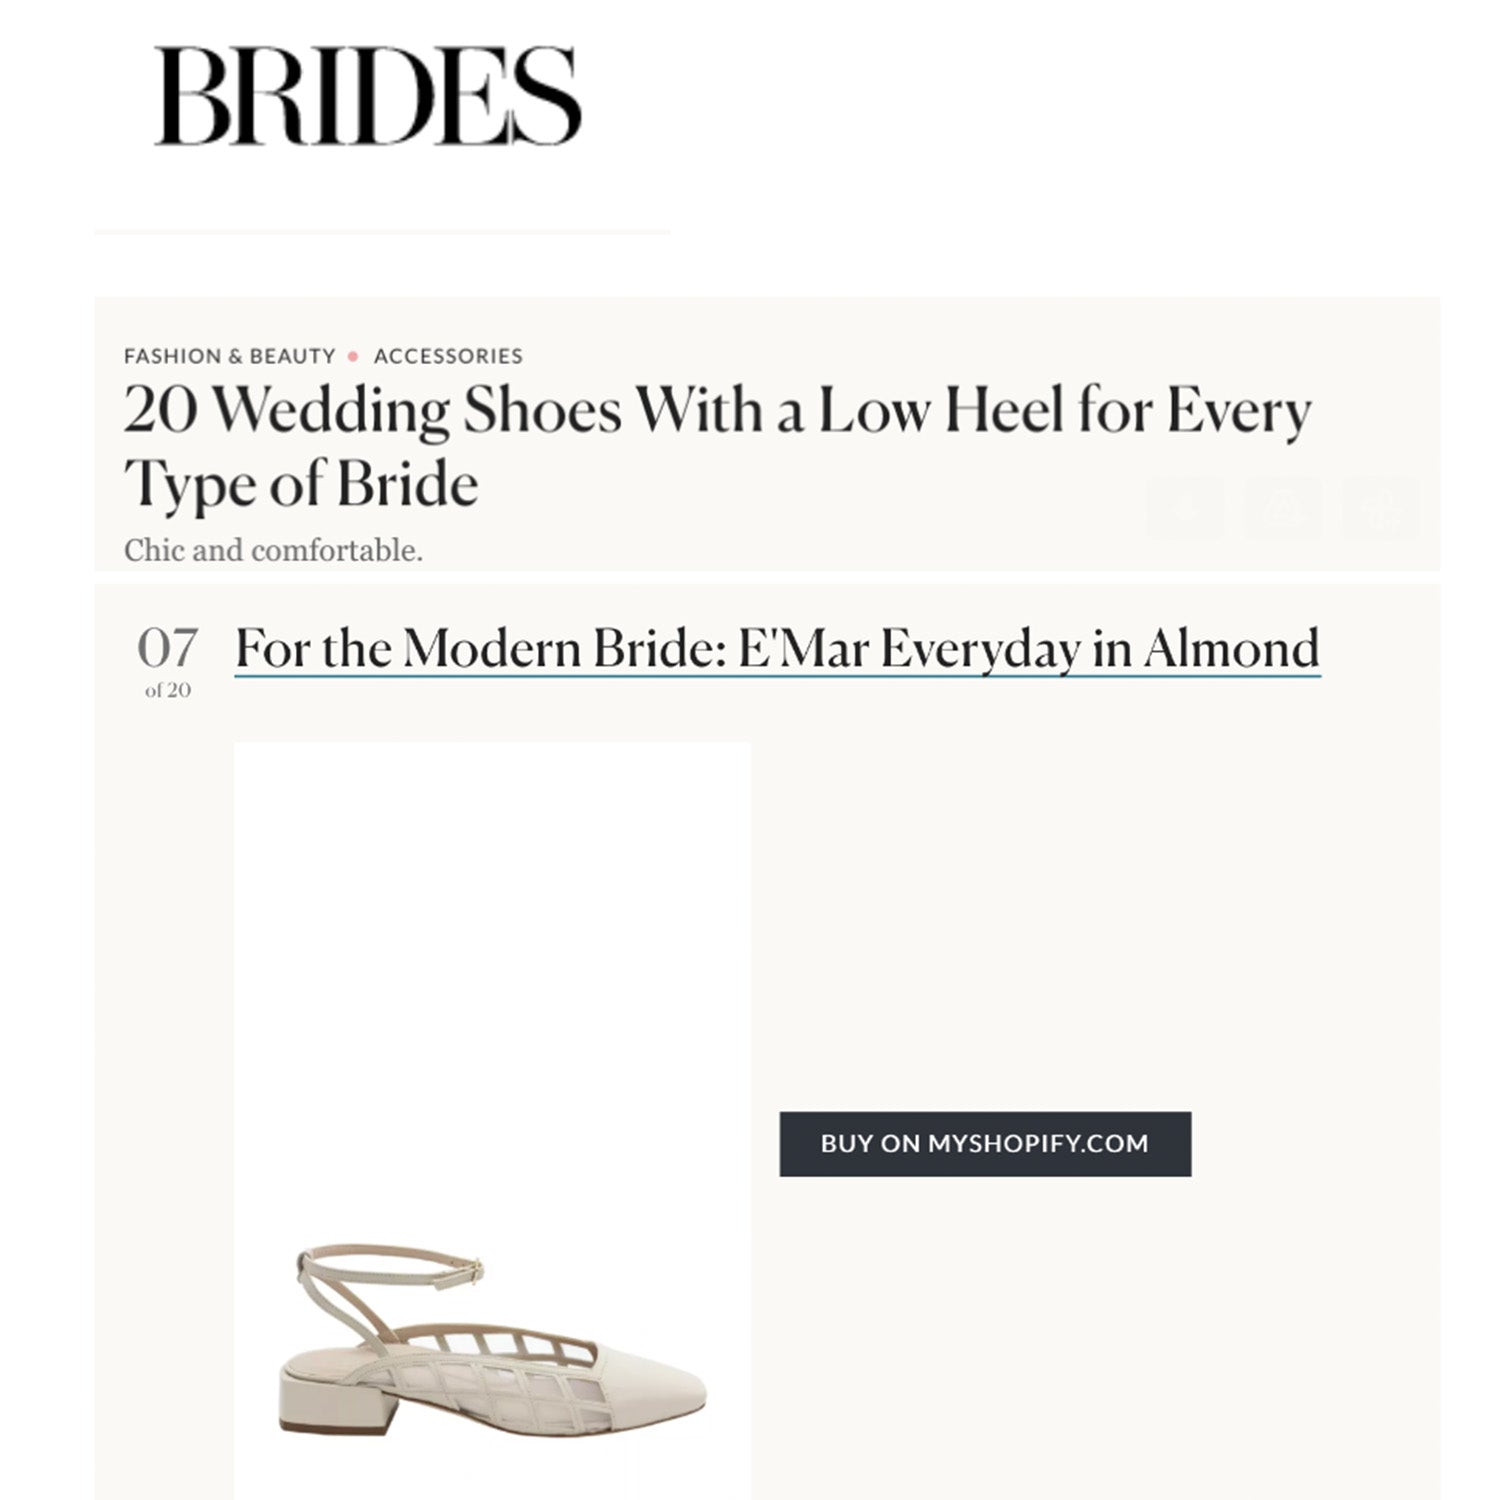 Brides News Article